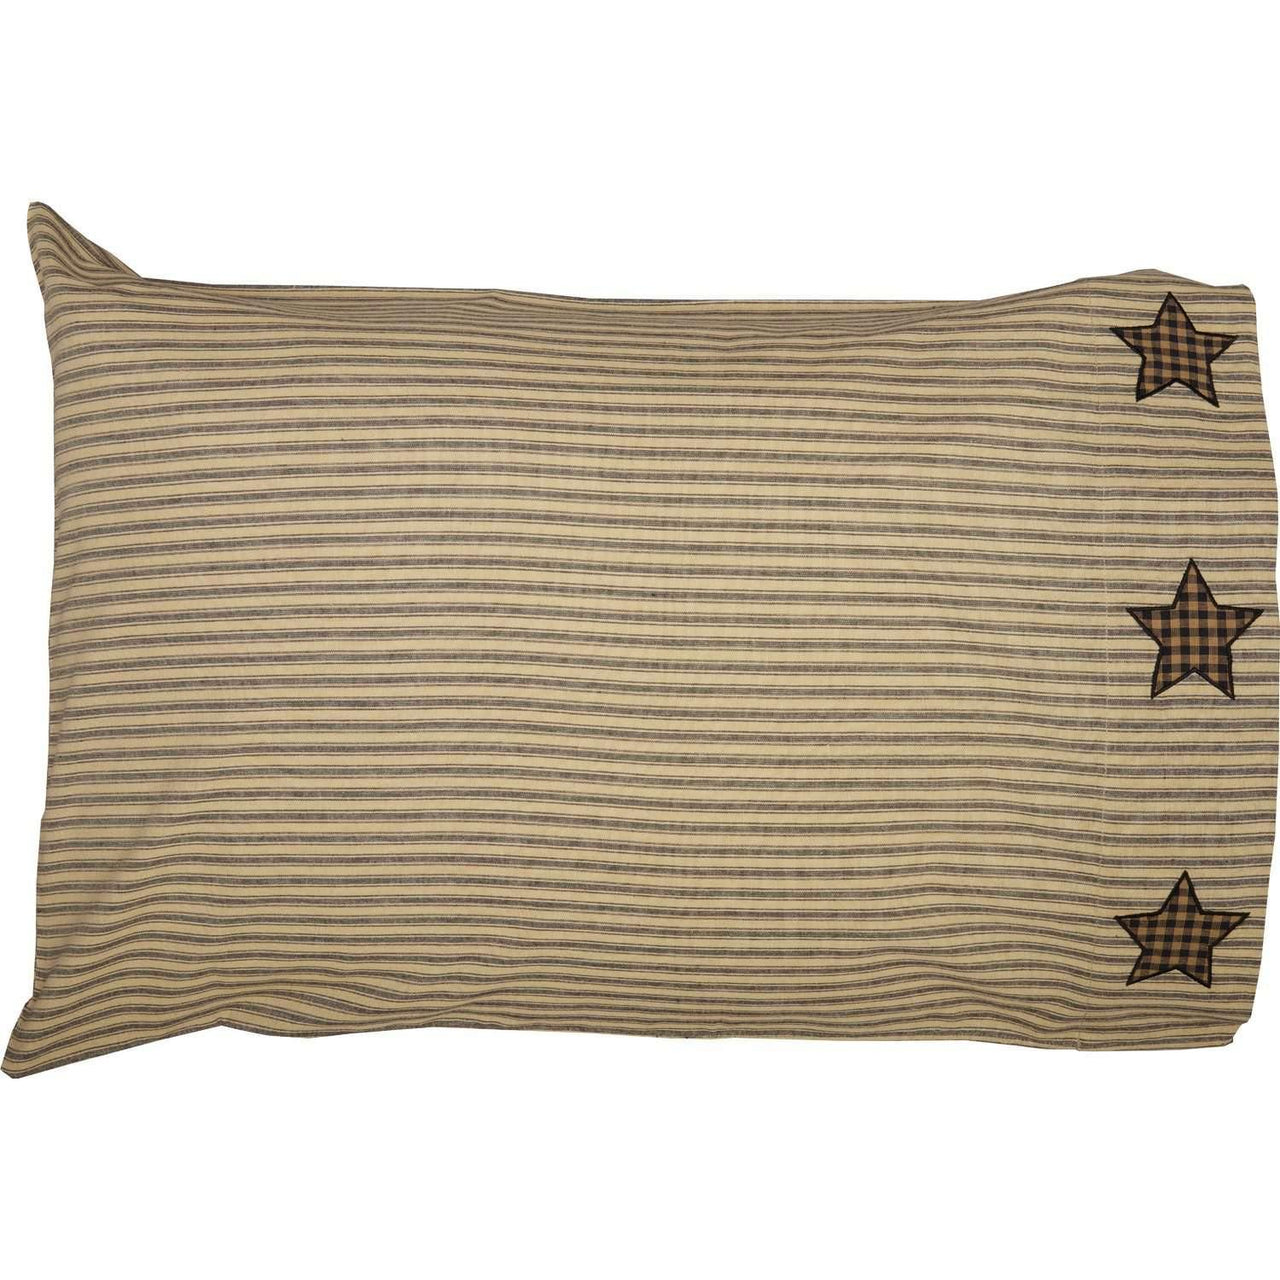 Farmhouse Star Standard Pillow Case w/Applique Star Set of 2 21x30 VHC Brands - The Fox Decor